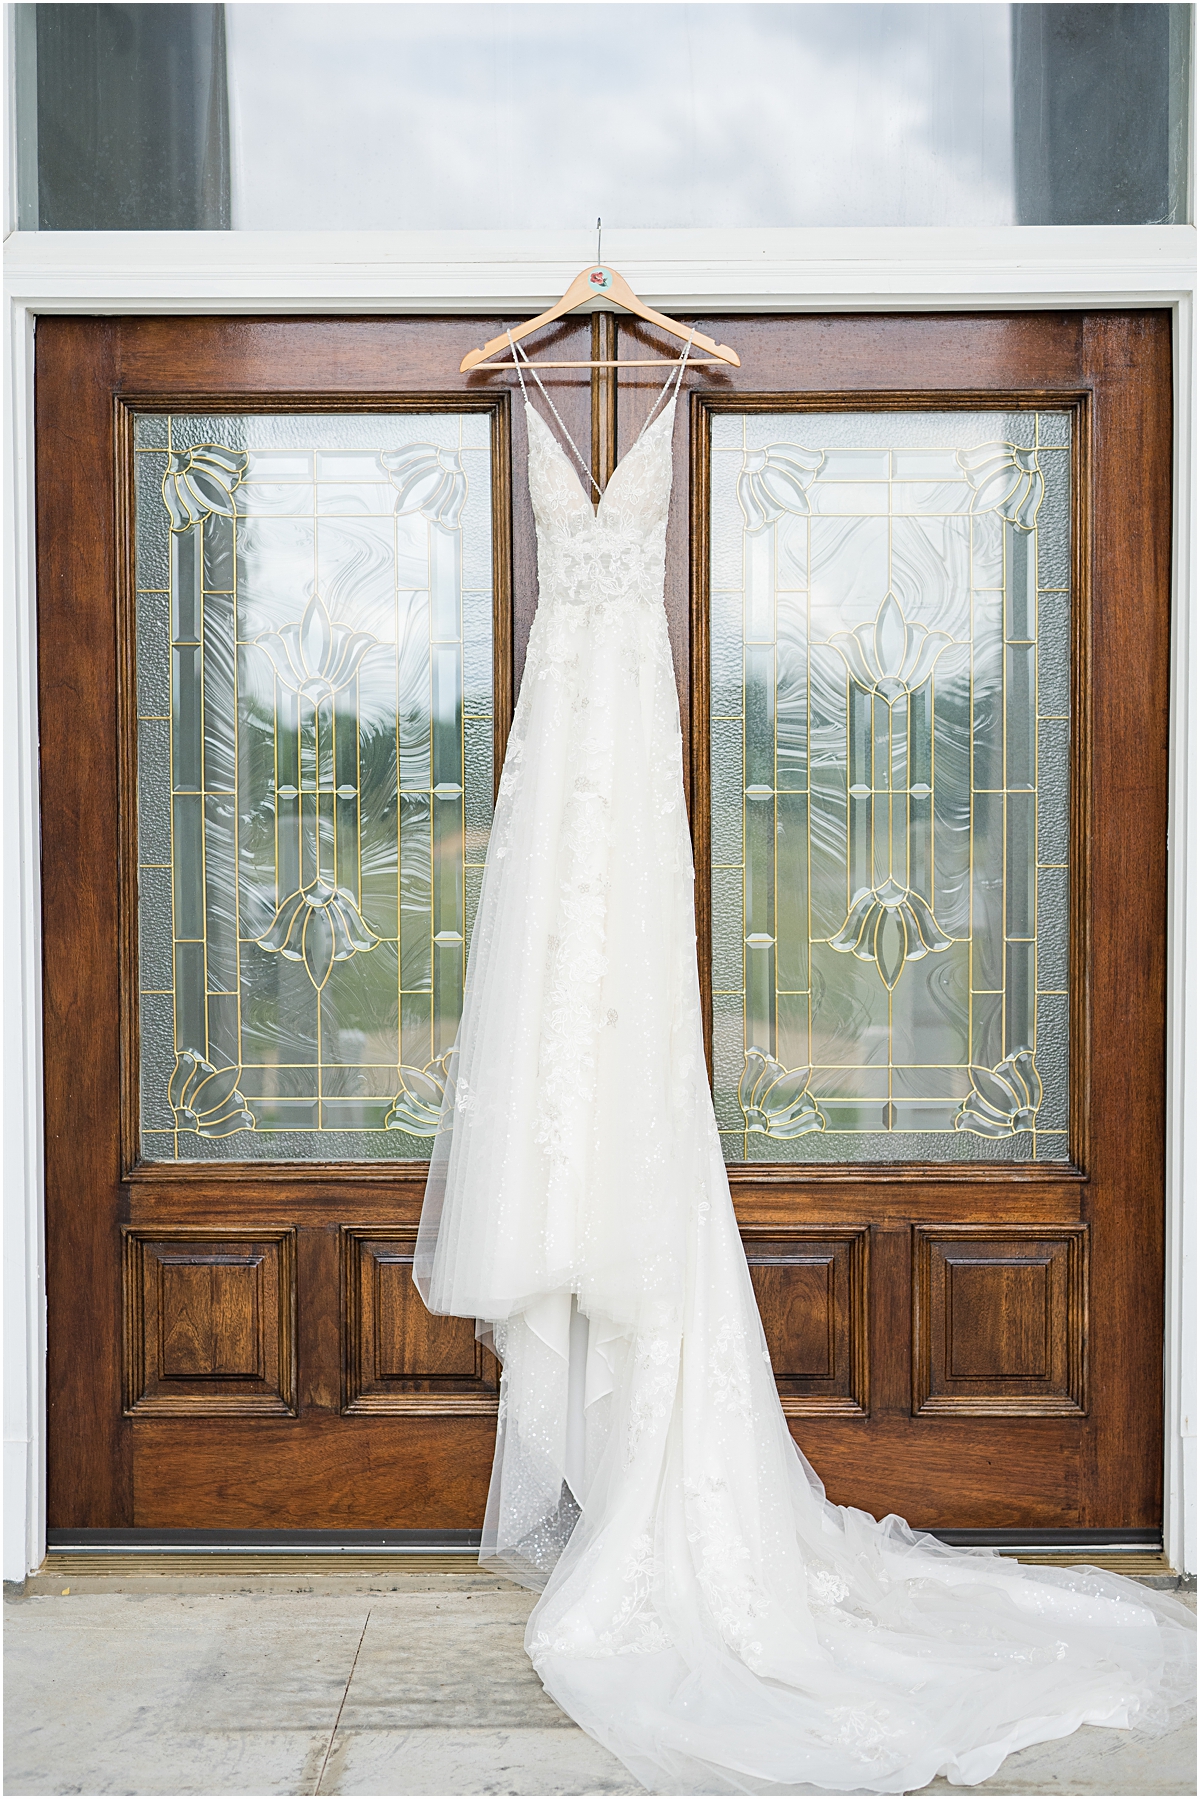 Detail of Brynn's wedding dress taken by a wedding photographer